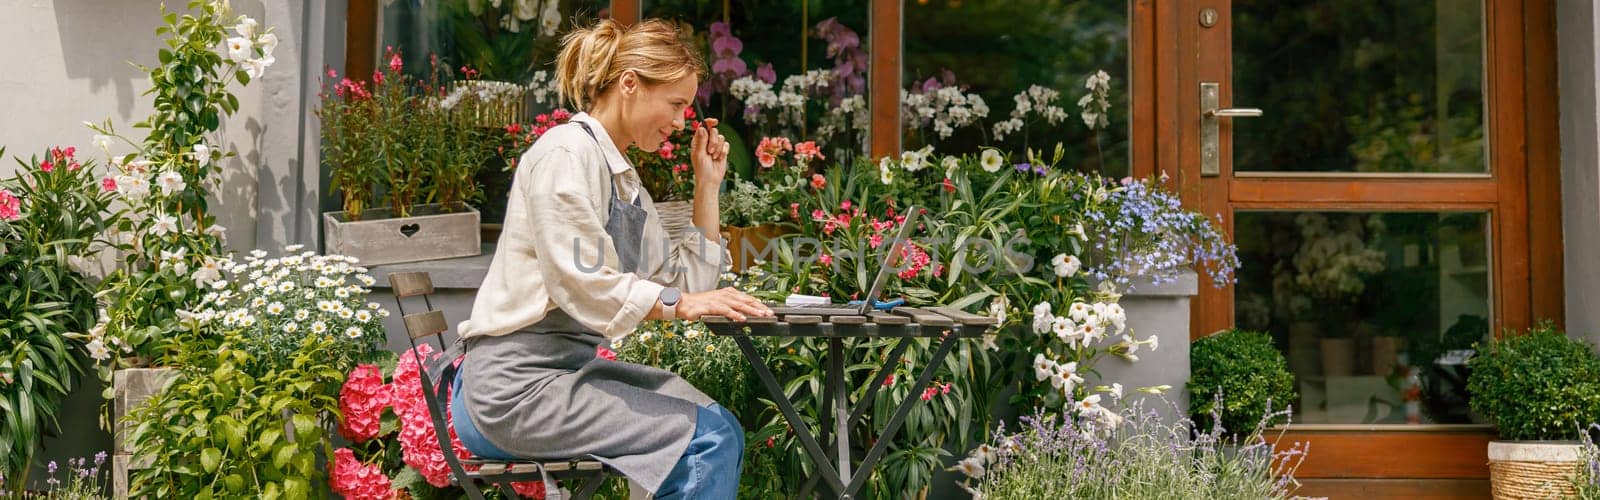 Professional smiling woman florist looking laptop got order at desk in her flower shop by Yaroslav_astakhov